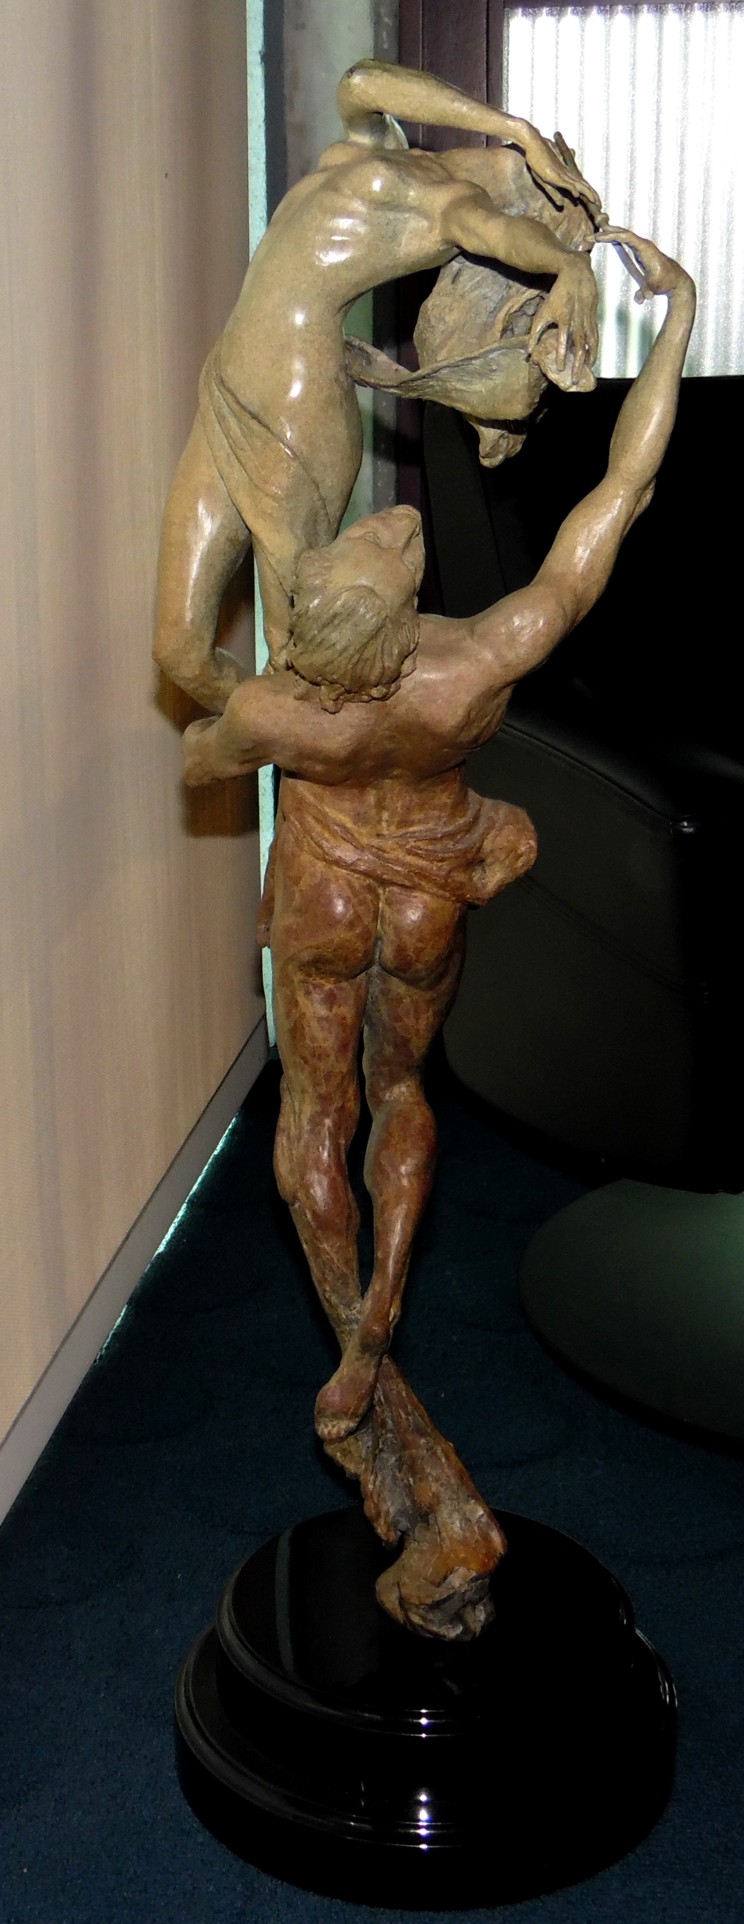 N. TUAN - Romantic Harmony - bronze sculpture